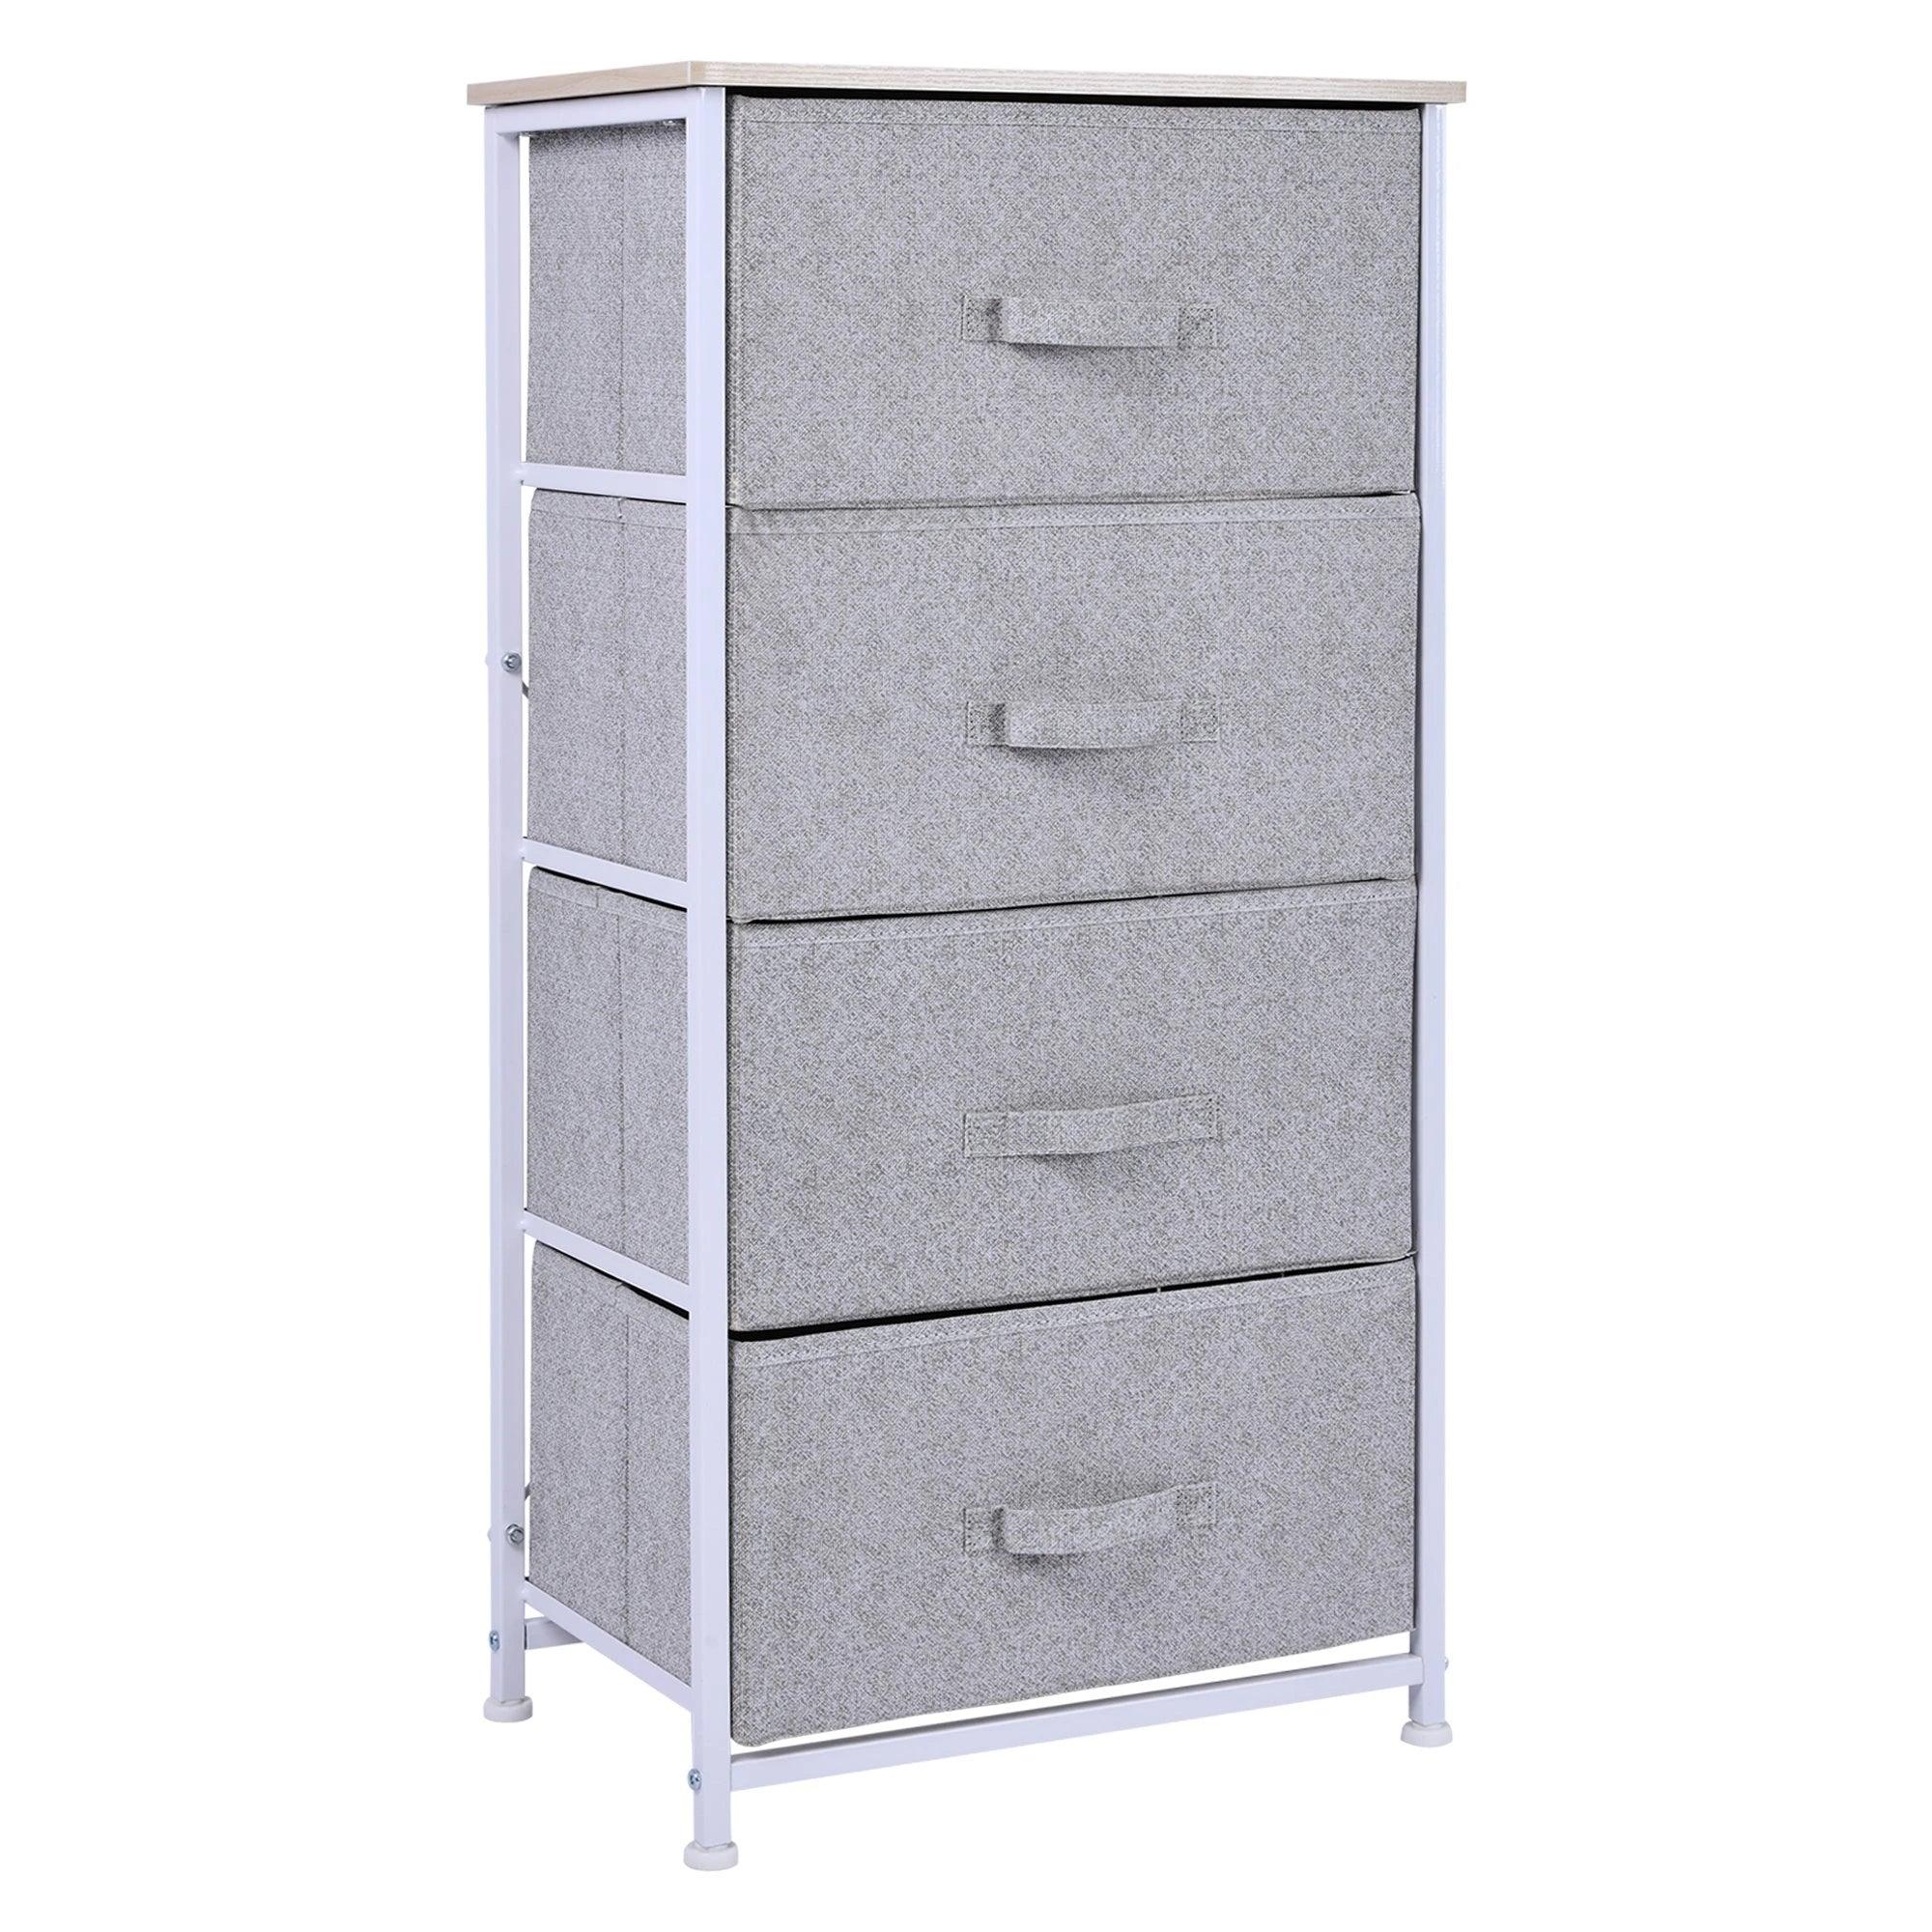 Linen Drawer Cabinet Organizer Storage Dresser Tower with 4 Removable Drawer